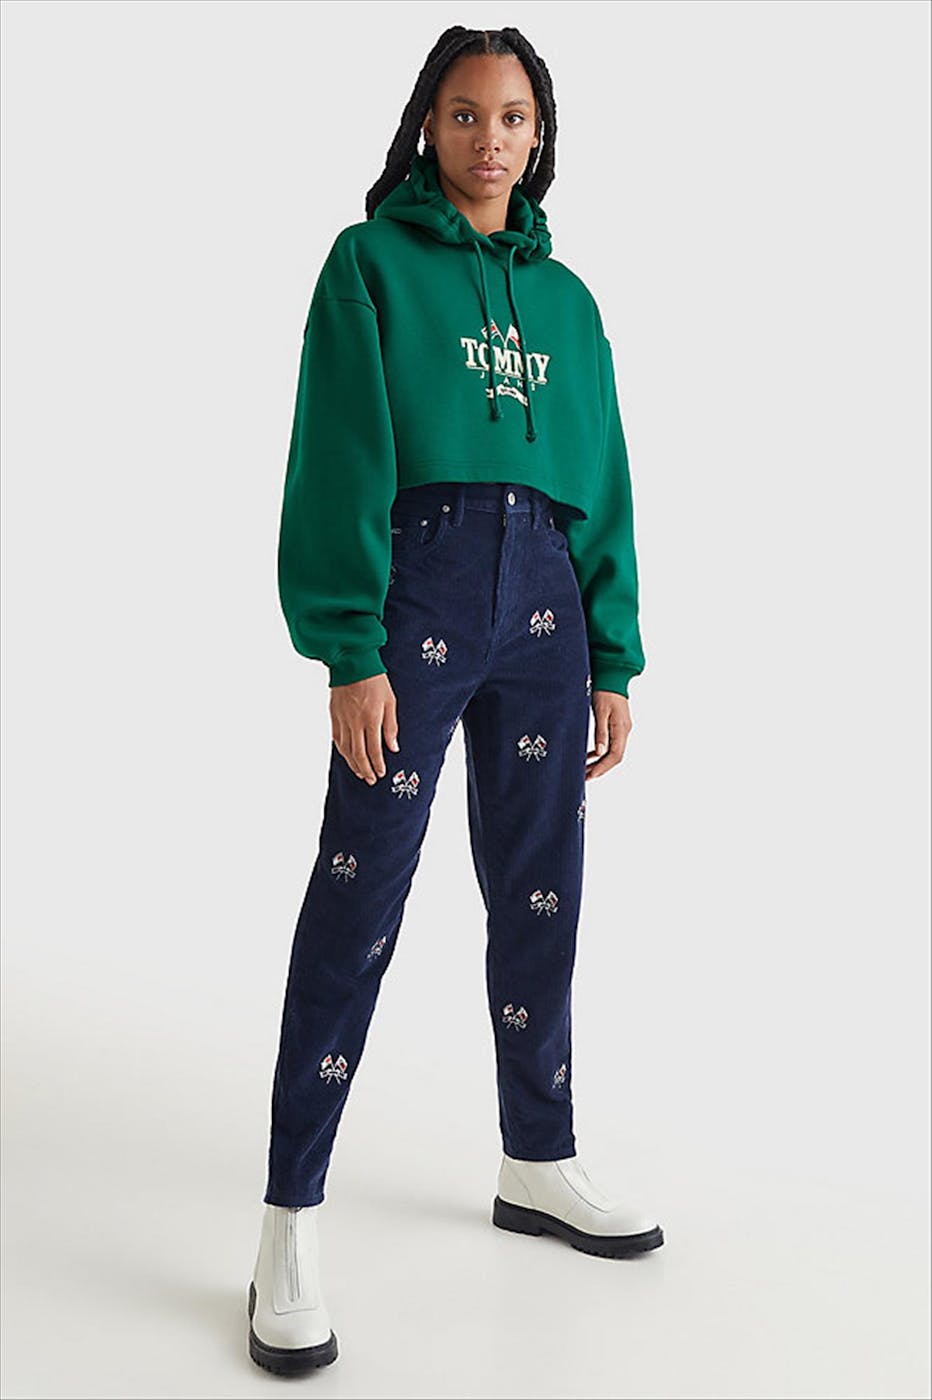 Tommy Jeans - Groene Super Crop sweater